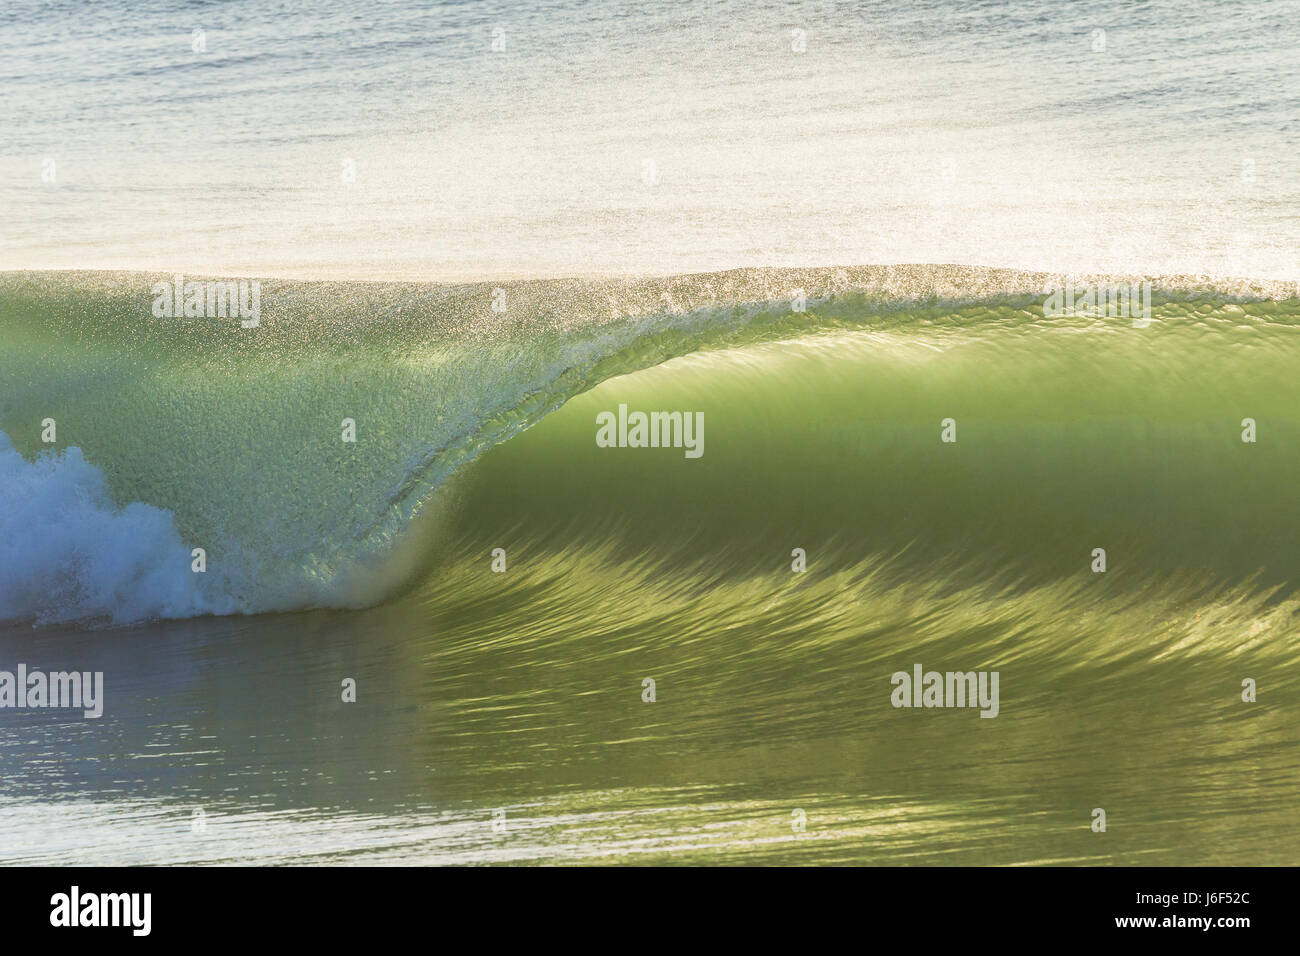 Wave curling crashing water closeup ocean beach Stock Photo